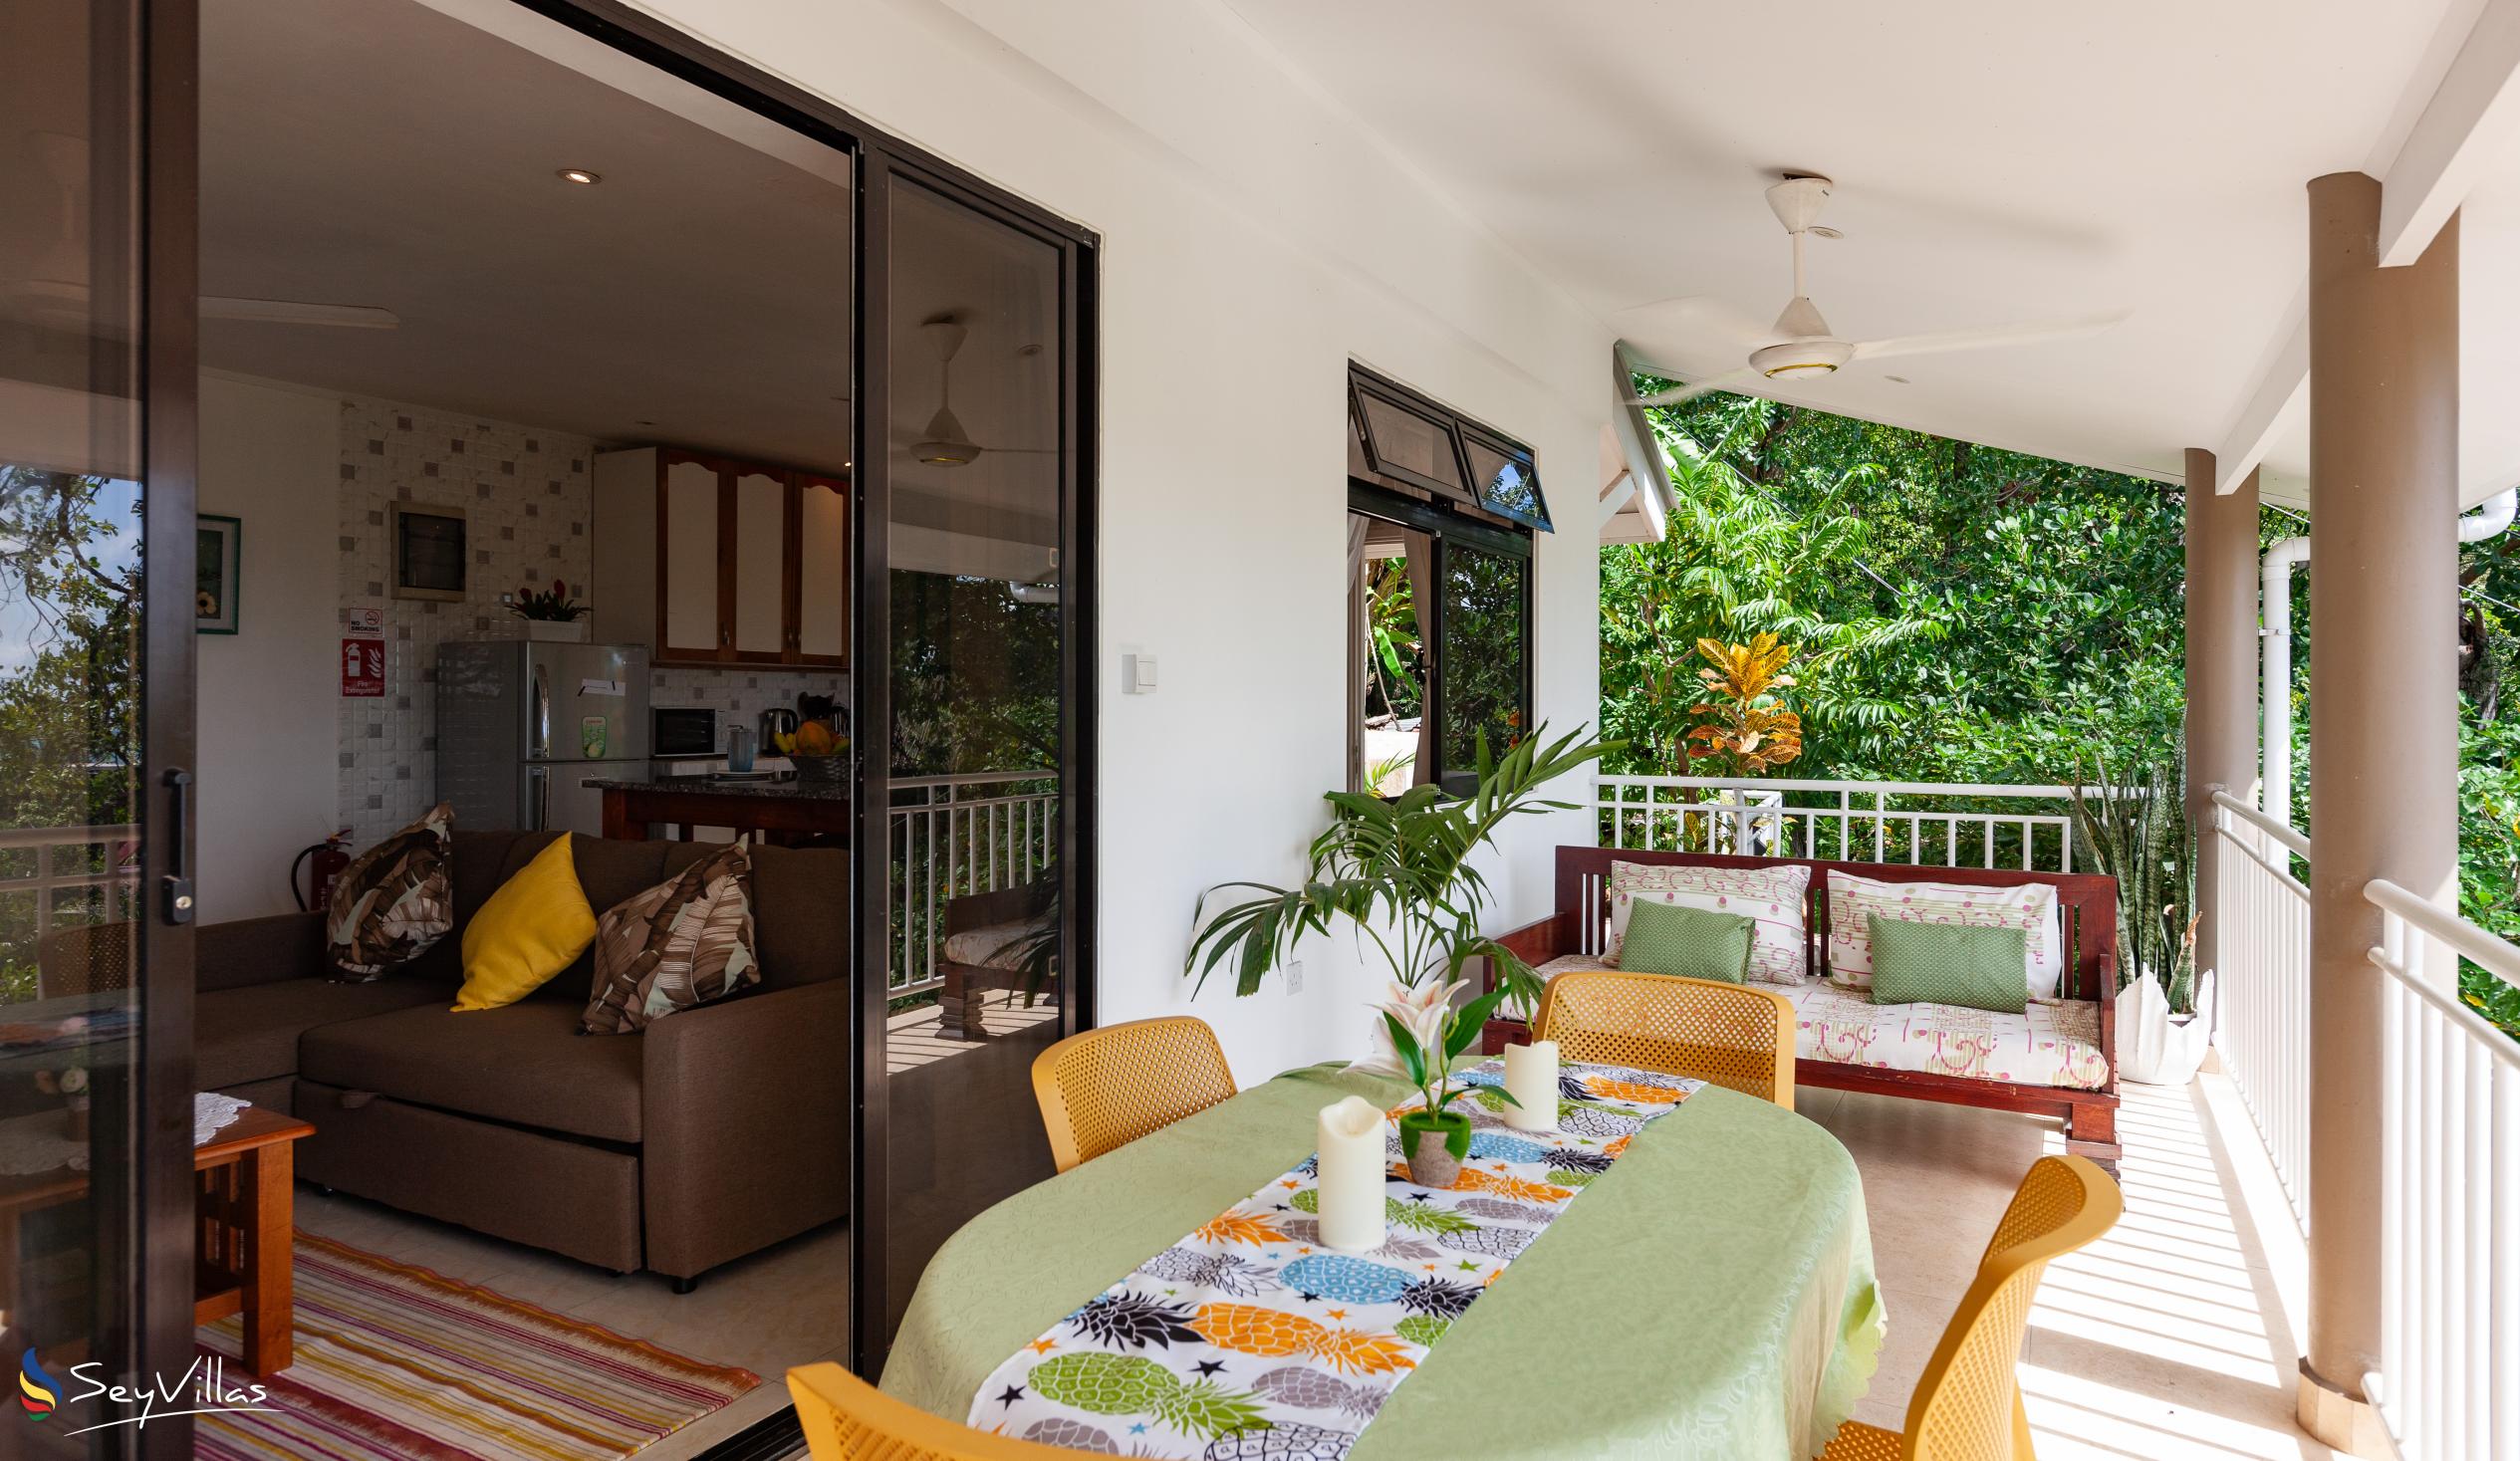 Foto 20: Myra's Self Catering Apartment - Appartamento con 1 camera - Praslin (Seychelles)